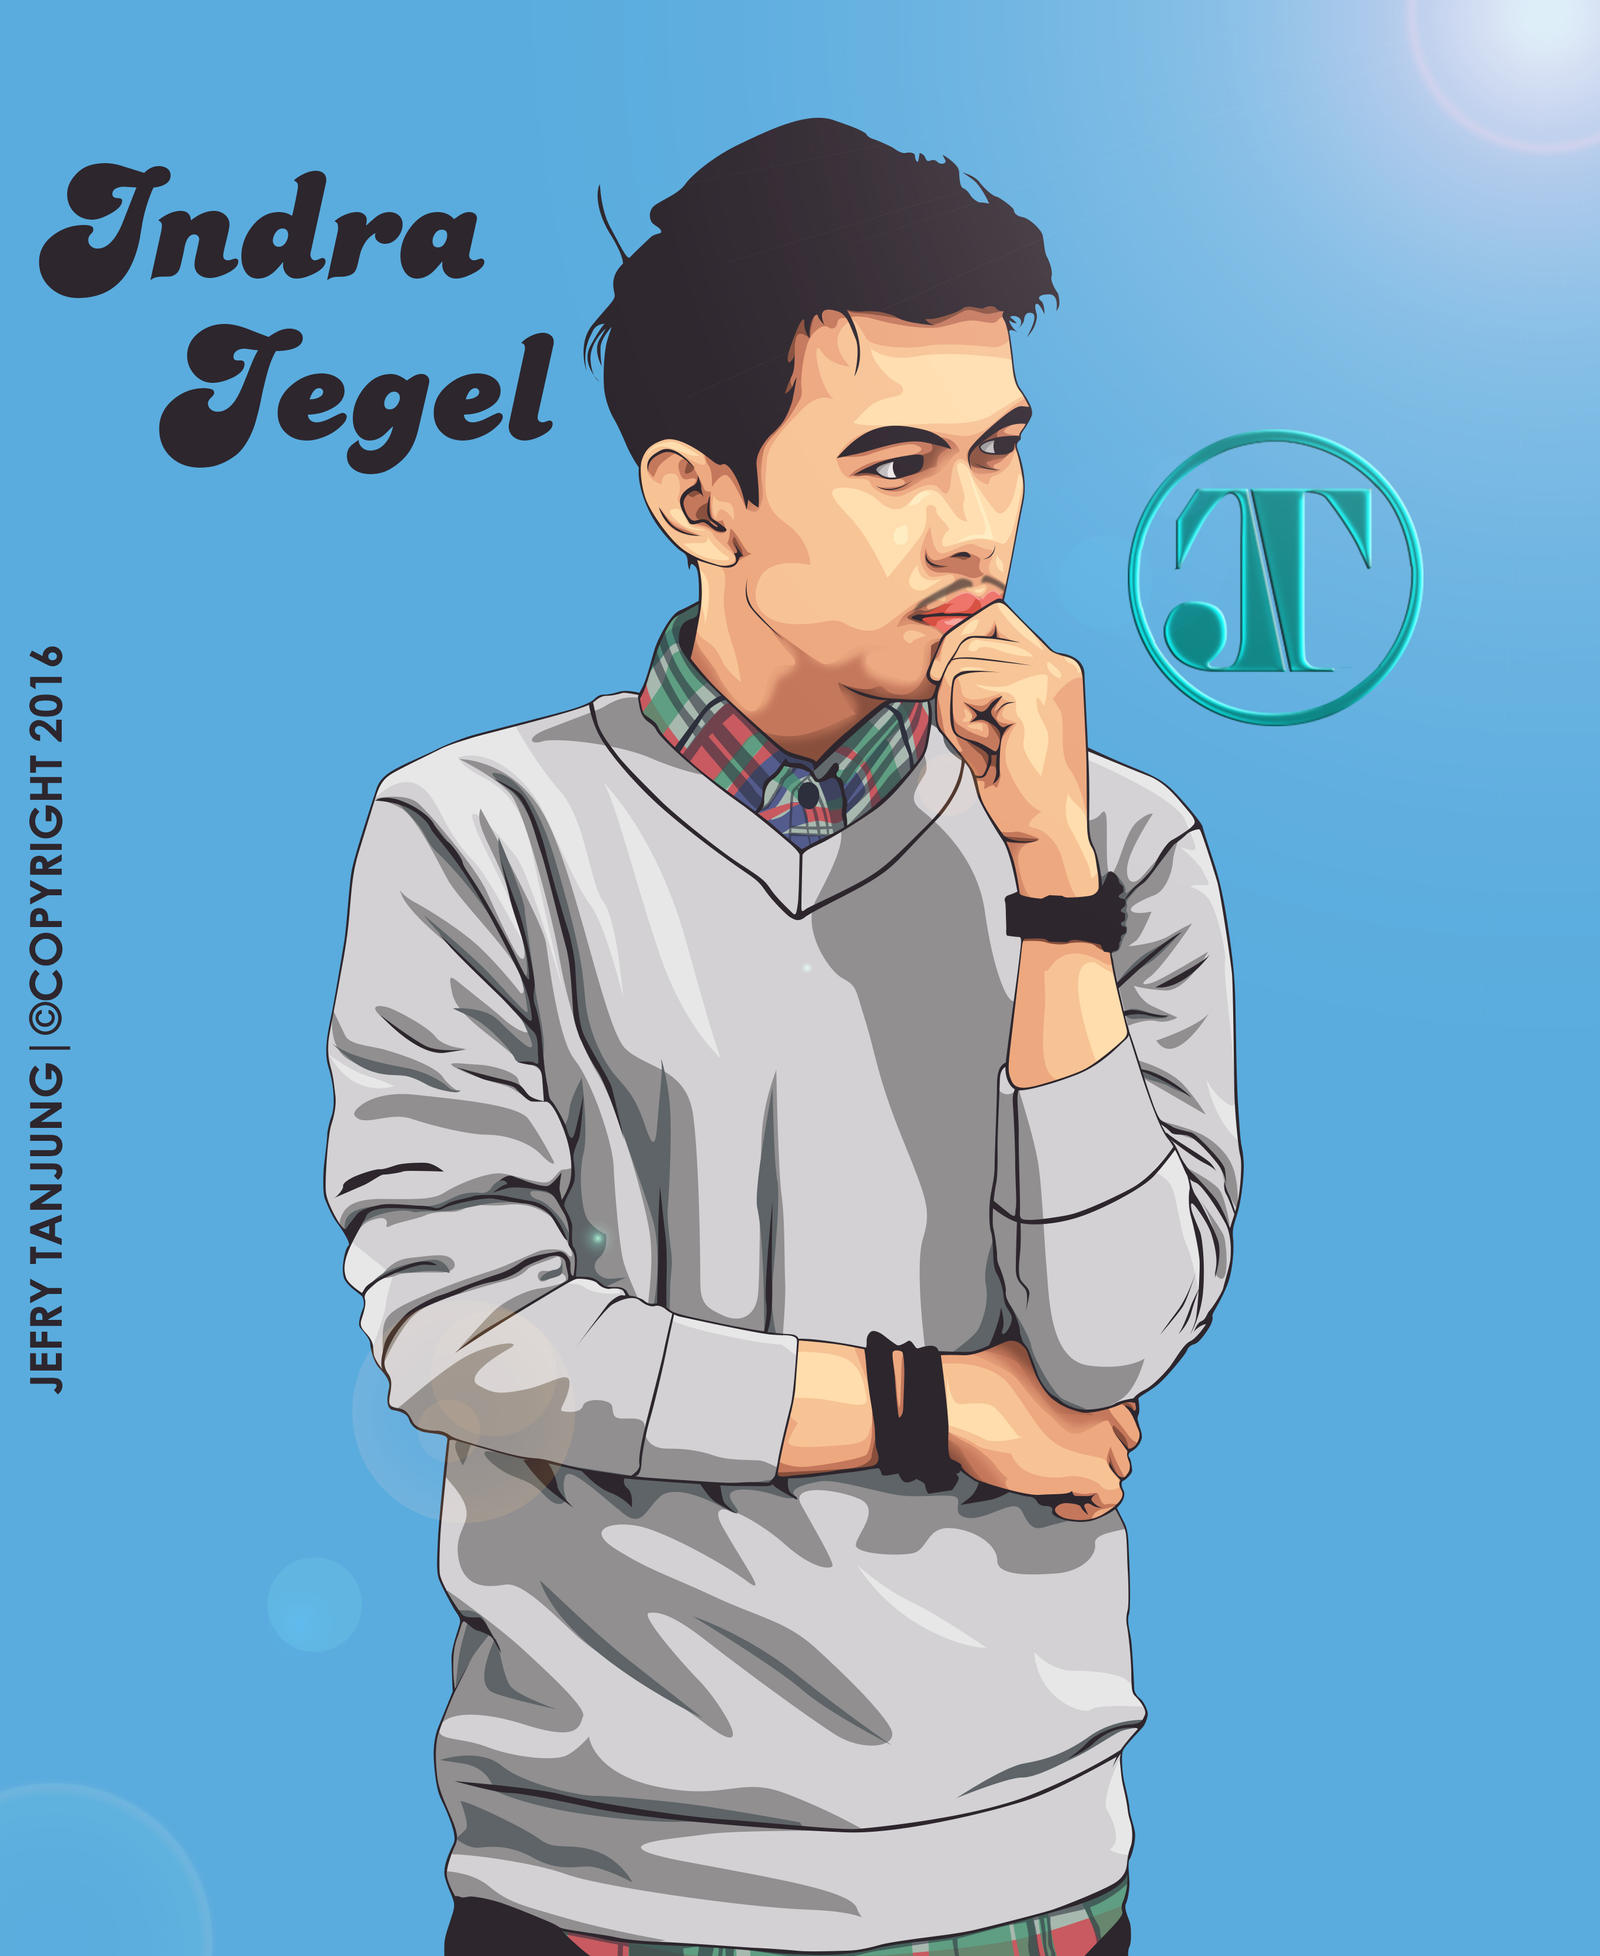 Indra jegel